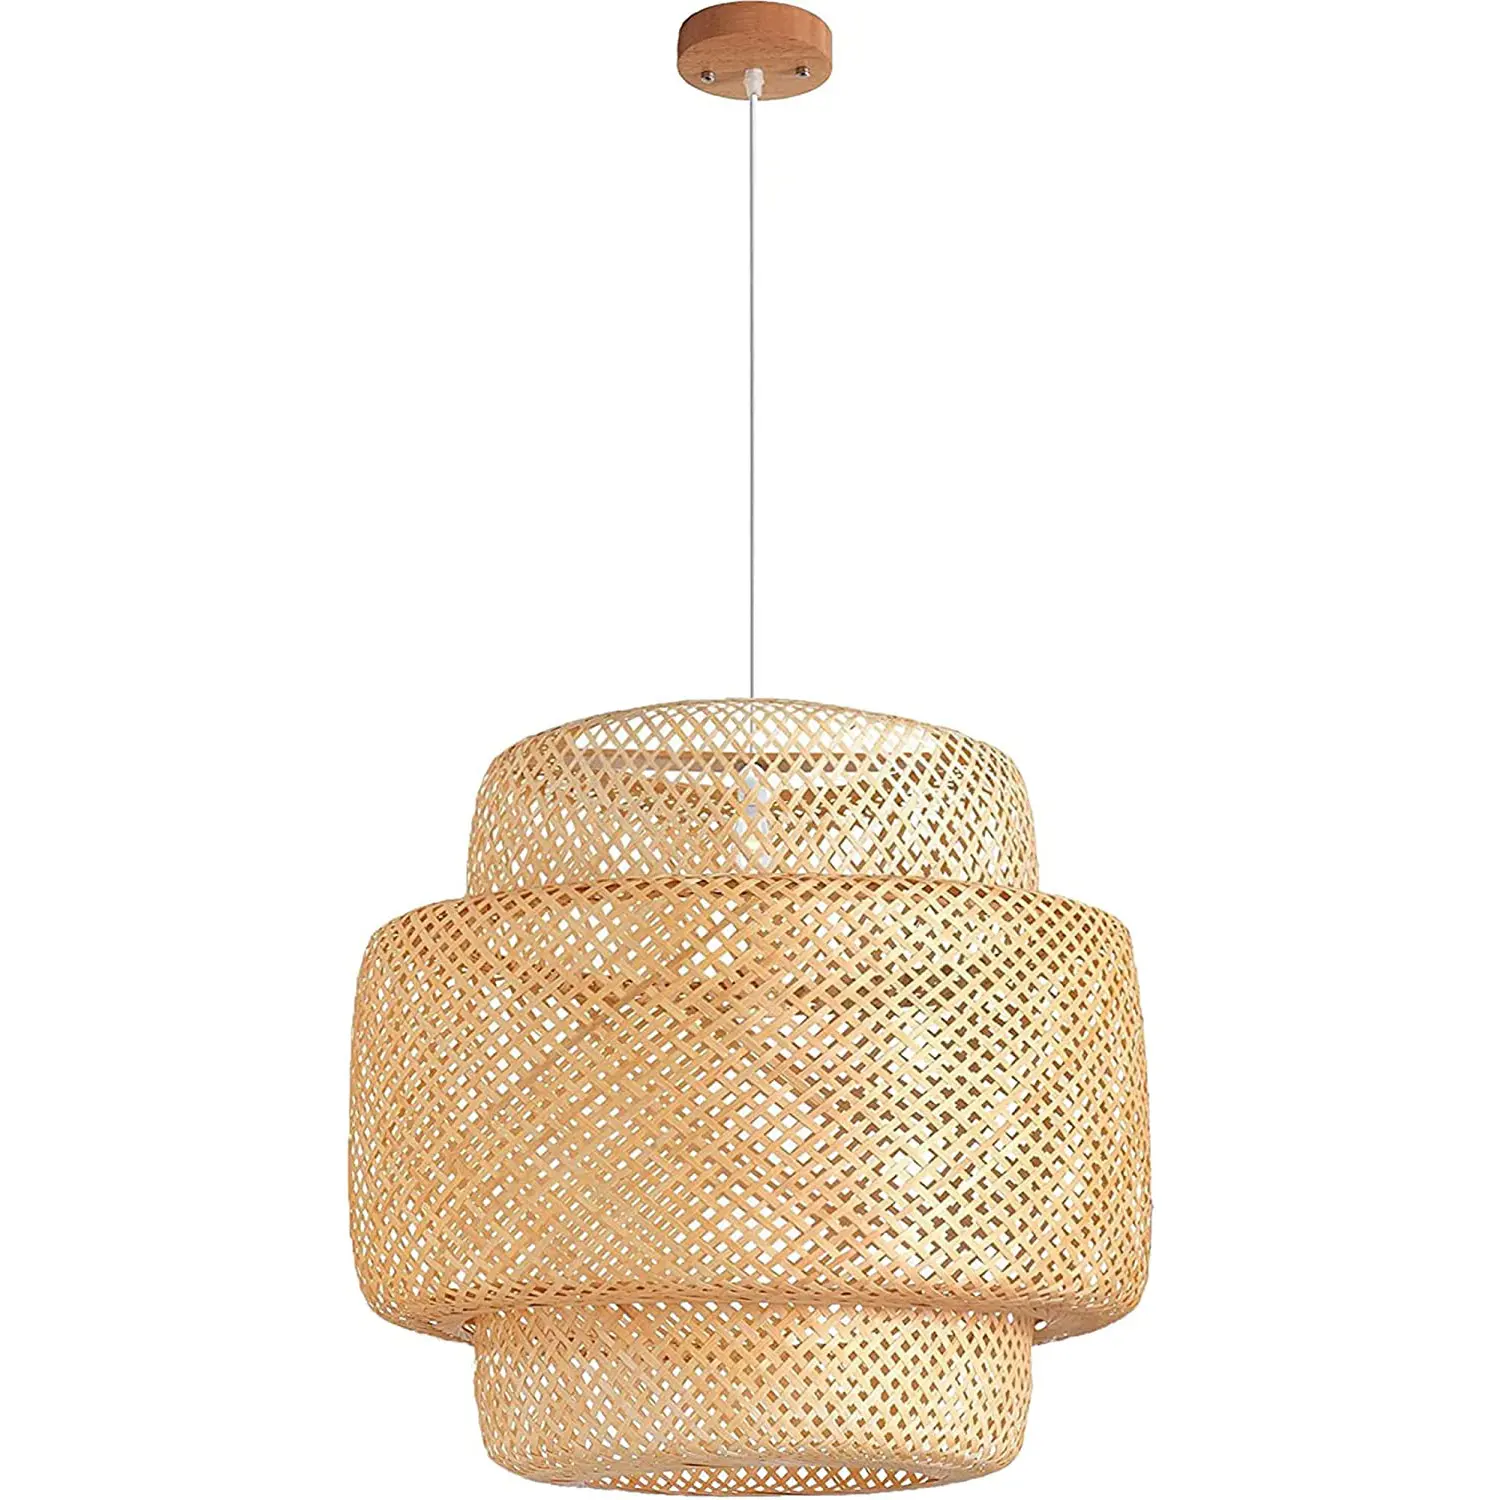 Hand woven bamboo chandelier natural rattan basket lamp Beige bamboo pendant light kitchen island lighting